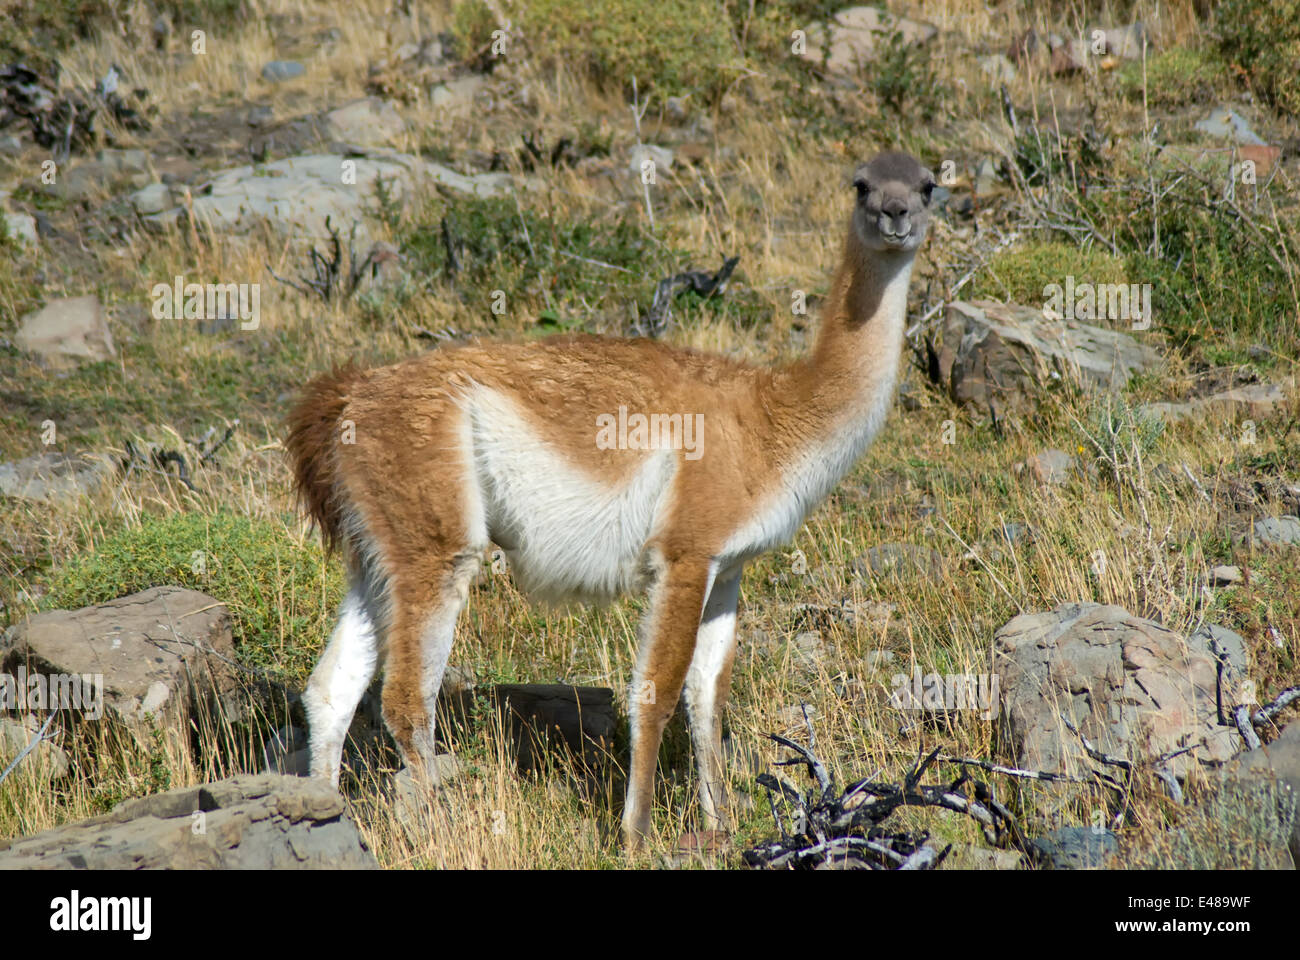 Llama, South American camelid. Torres de Paine National Park, Chile Stock Photo